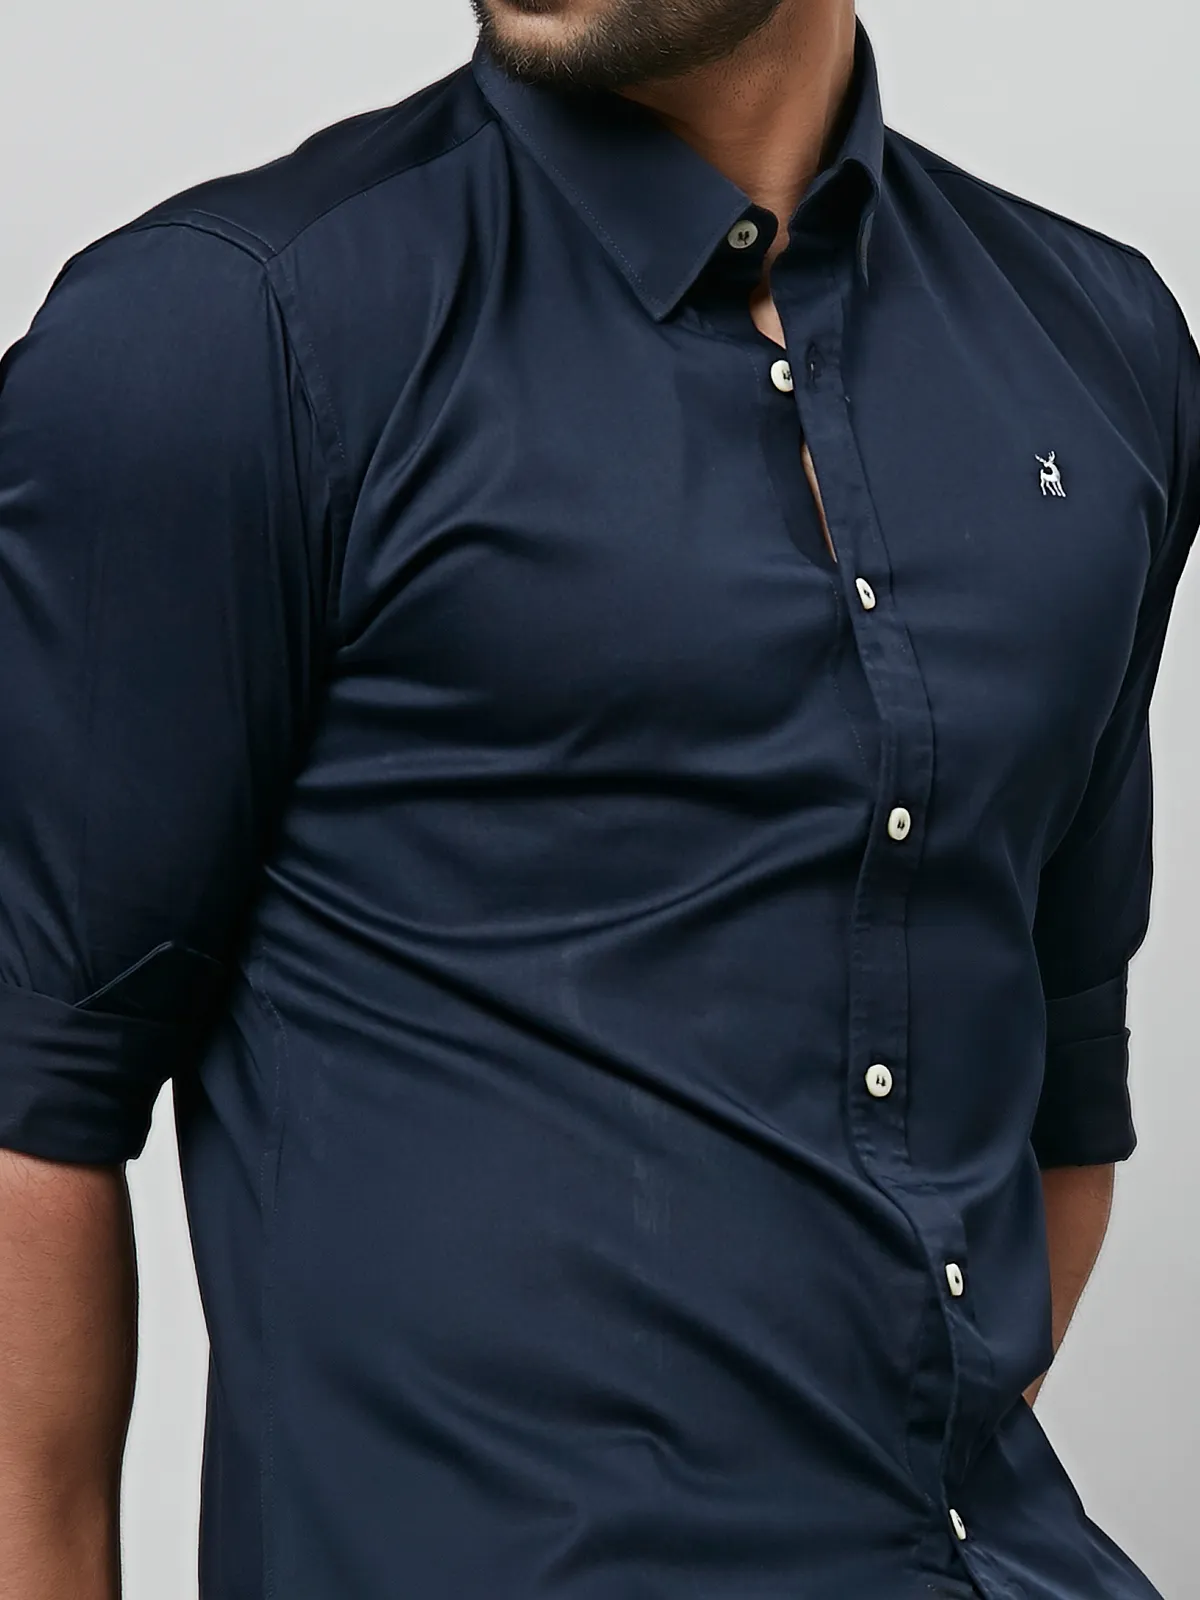 River Blue classy navy cotton casual shirt